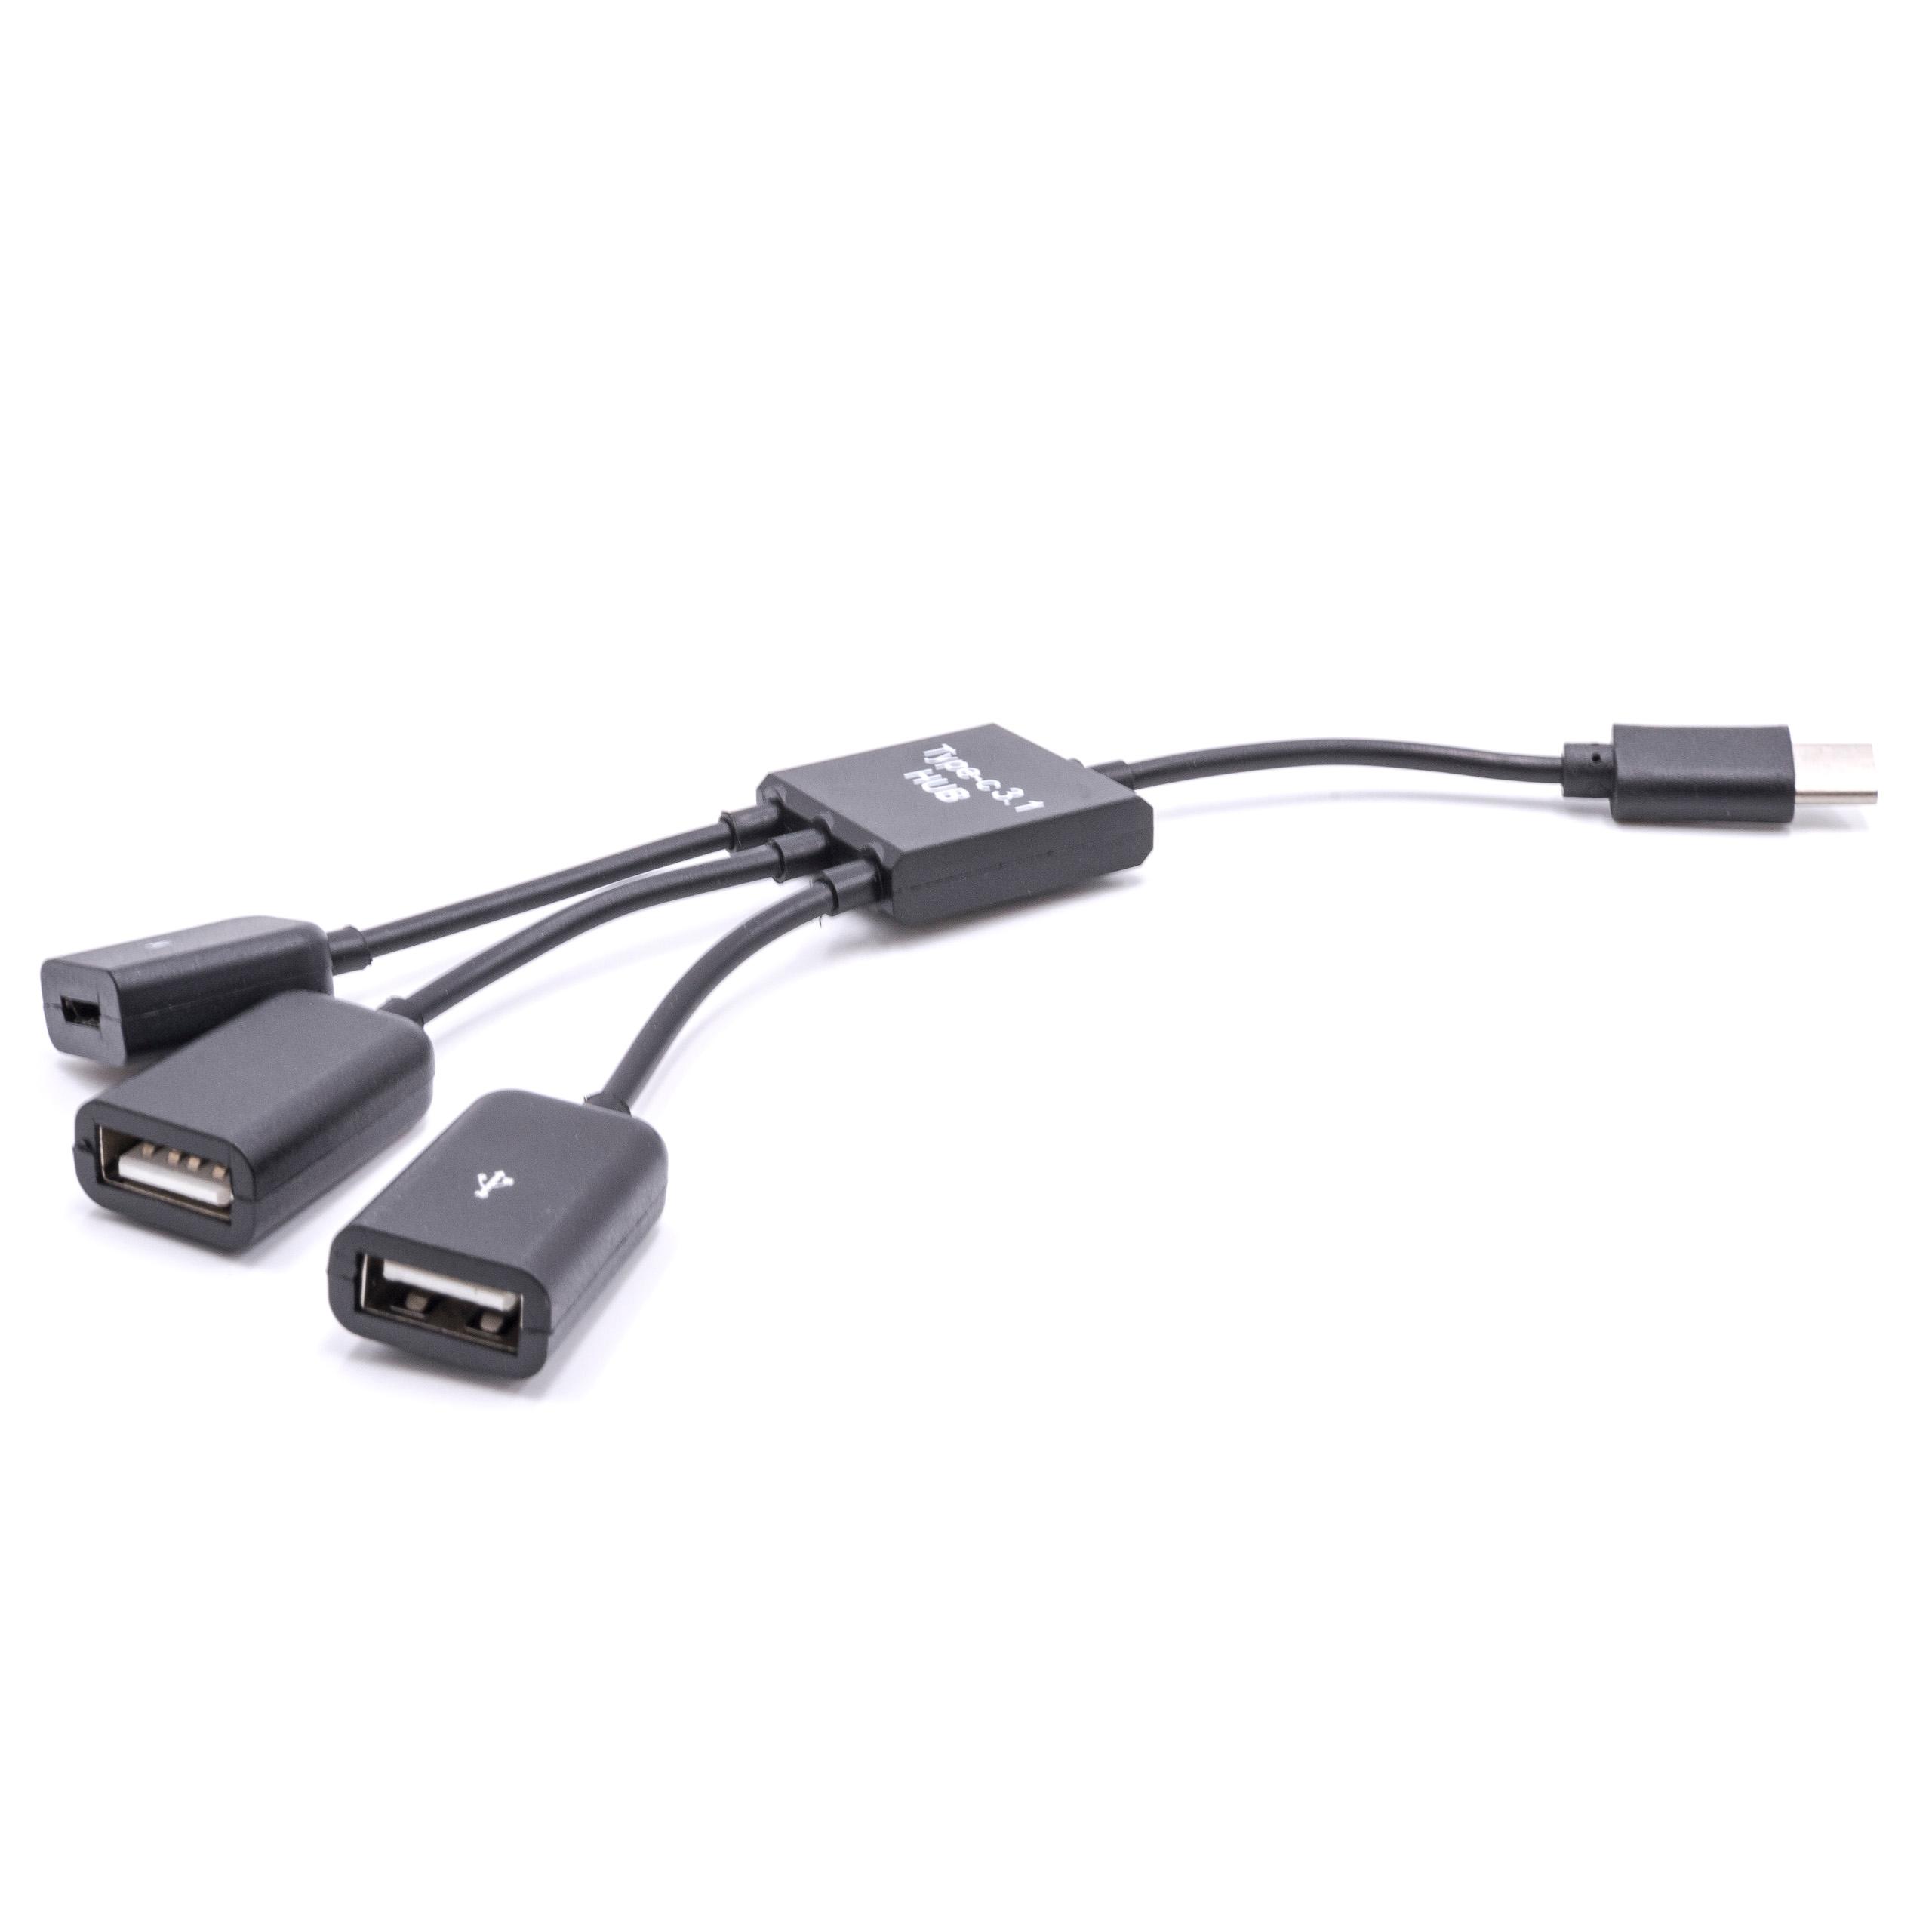 Adattatore OTG daUSB tipo C (maschio) a micro USB (femmina), 2x USB (femmina) per smartphone, tablet, laptop